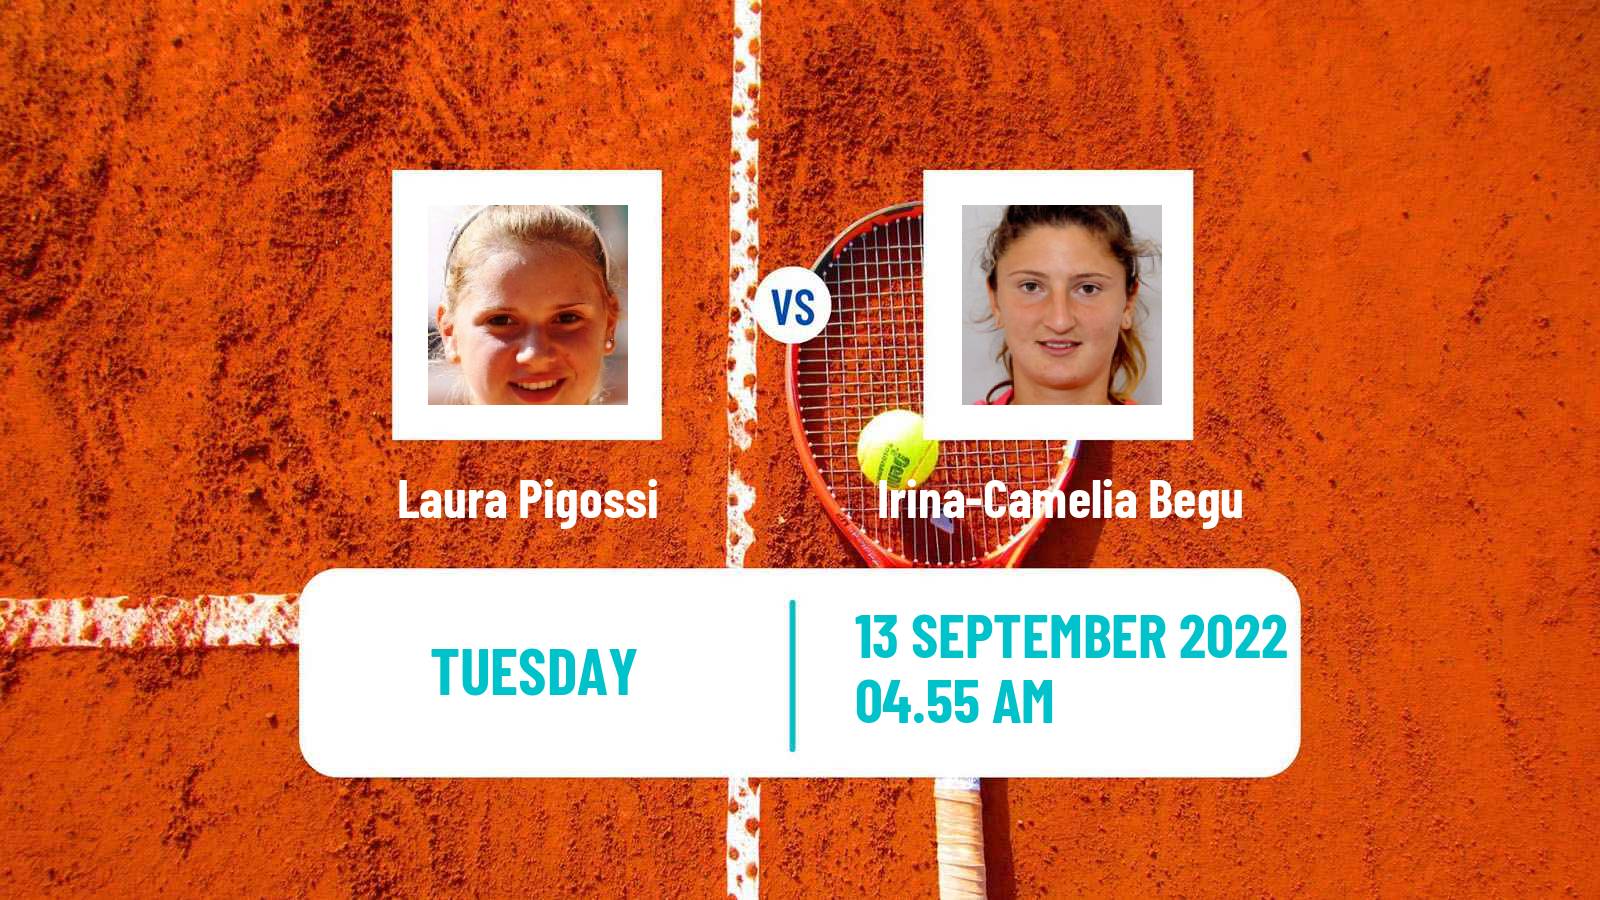 Tennis ATP Challenger Laura Pigossi - Irina-Camelia Begu